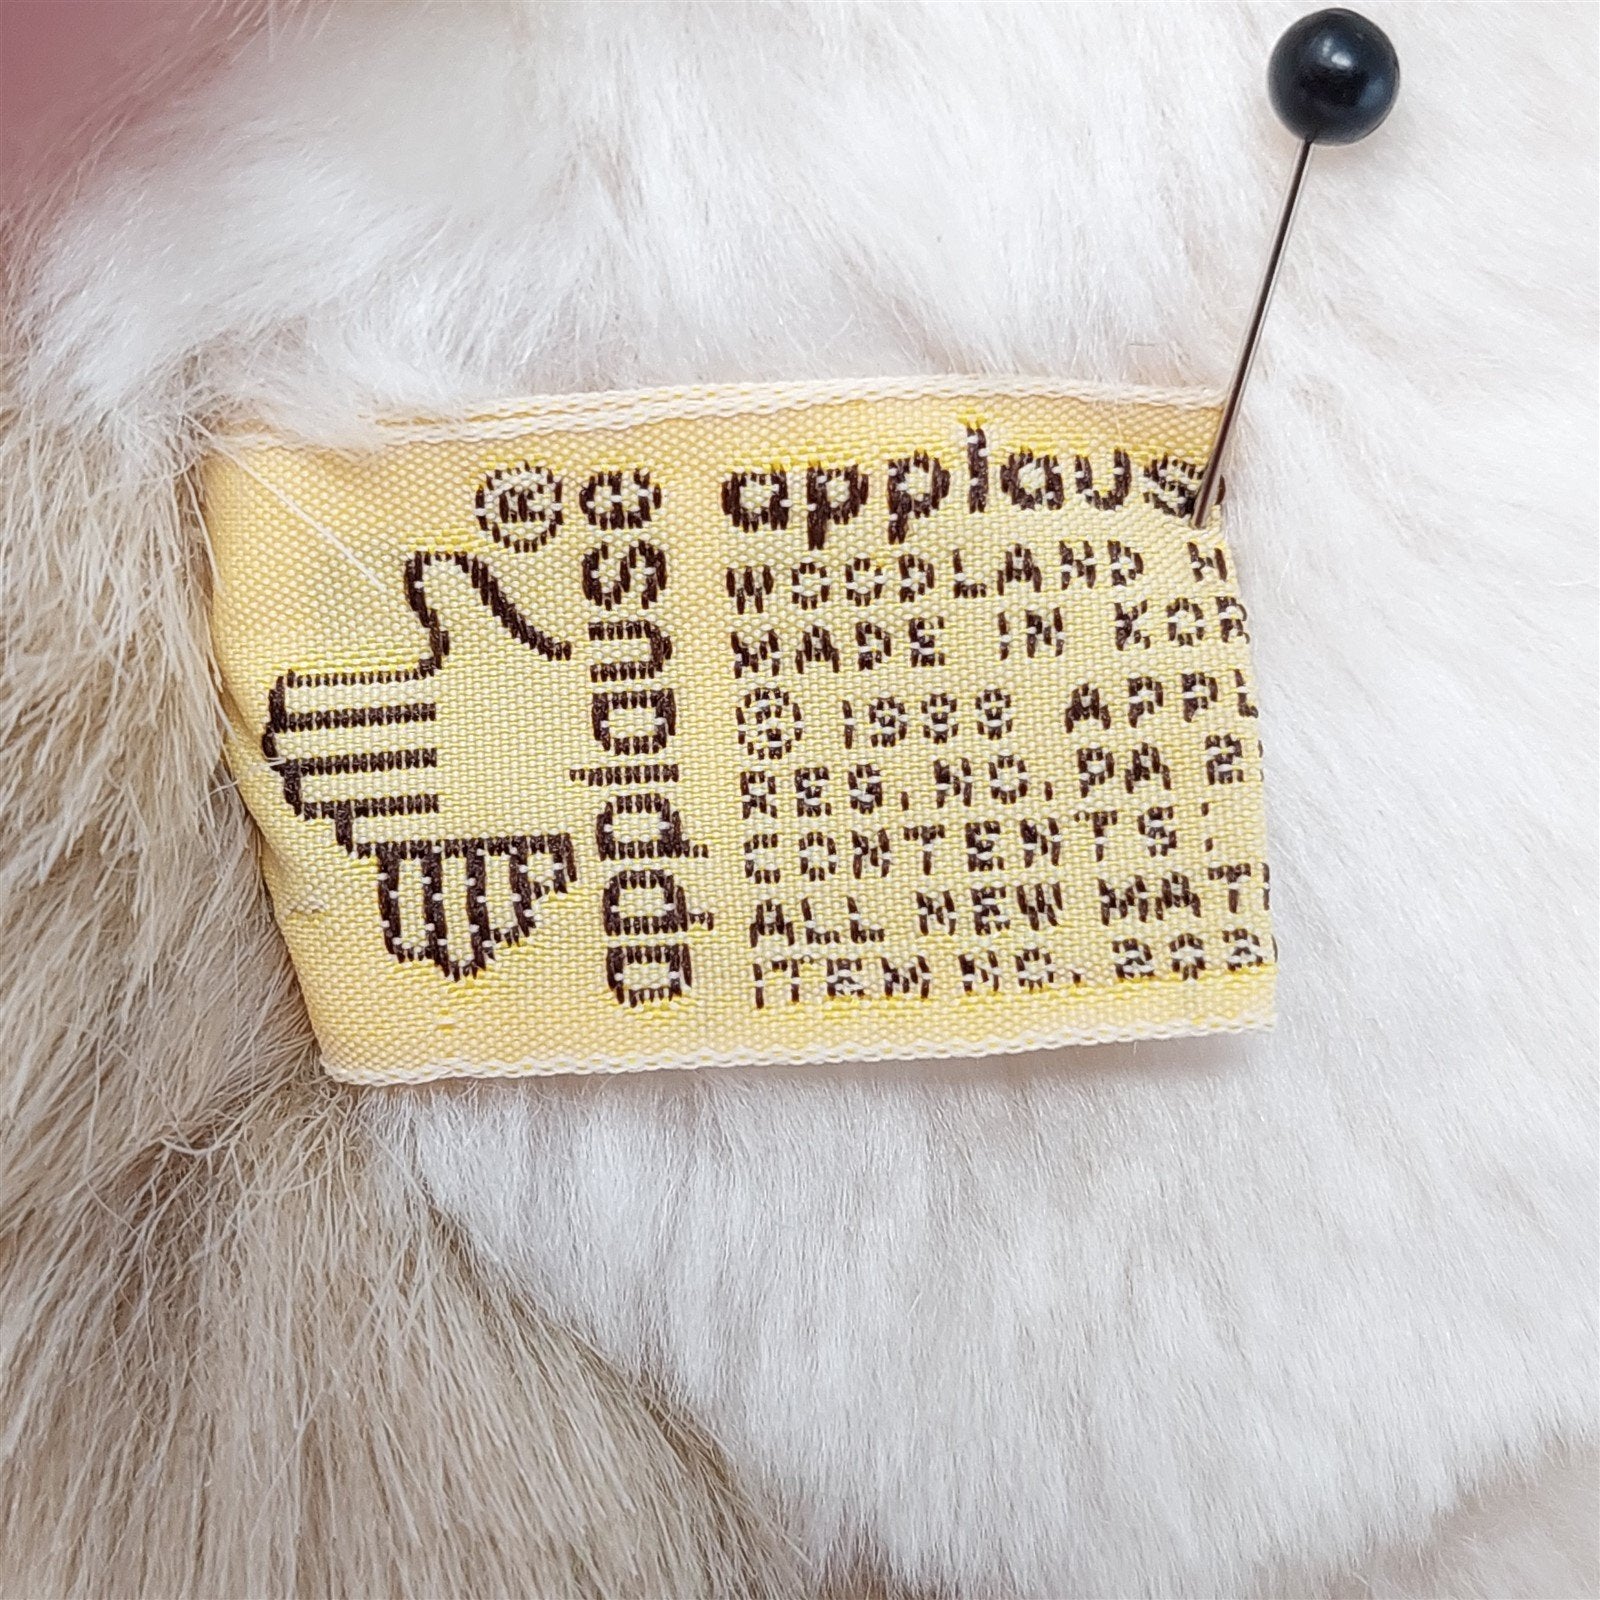 Bunny Rabbit Floppy Ears Stuffed Plush Toy by Applause 1988 Original Tag